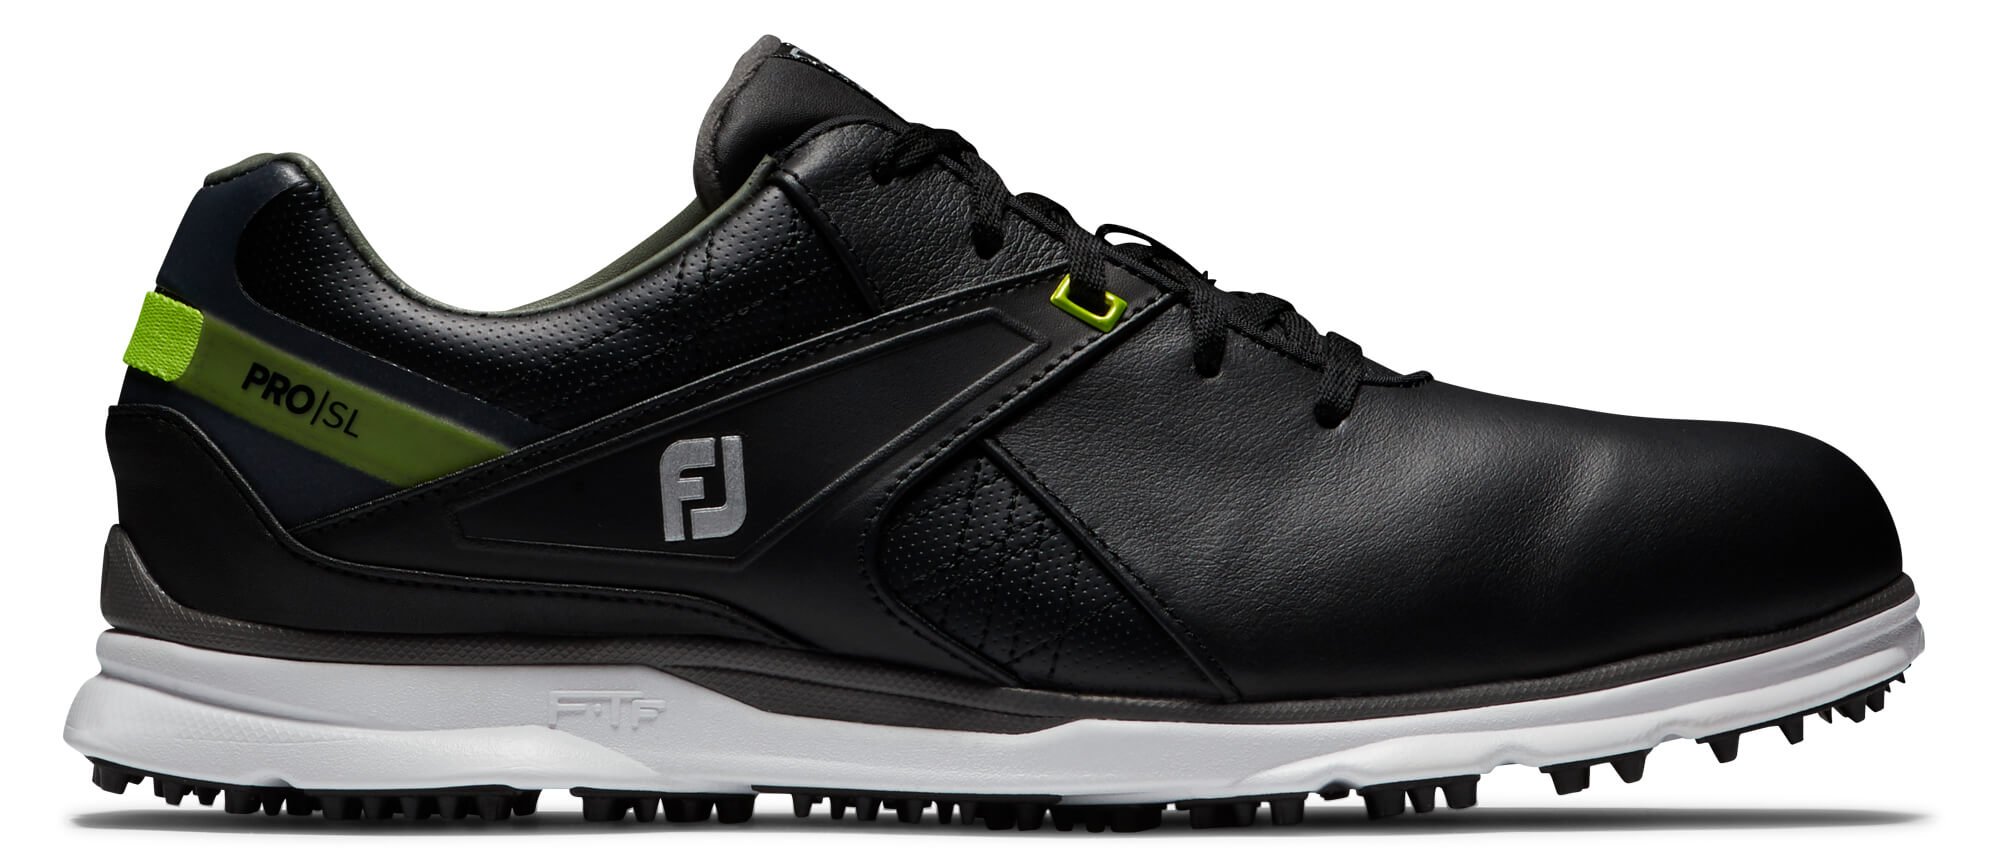 Save 47% on Footjoy Men's Pro Sl Golf Shoes In Black/lime, Size 7, Medium